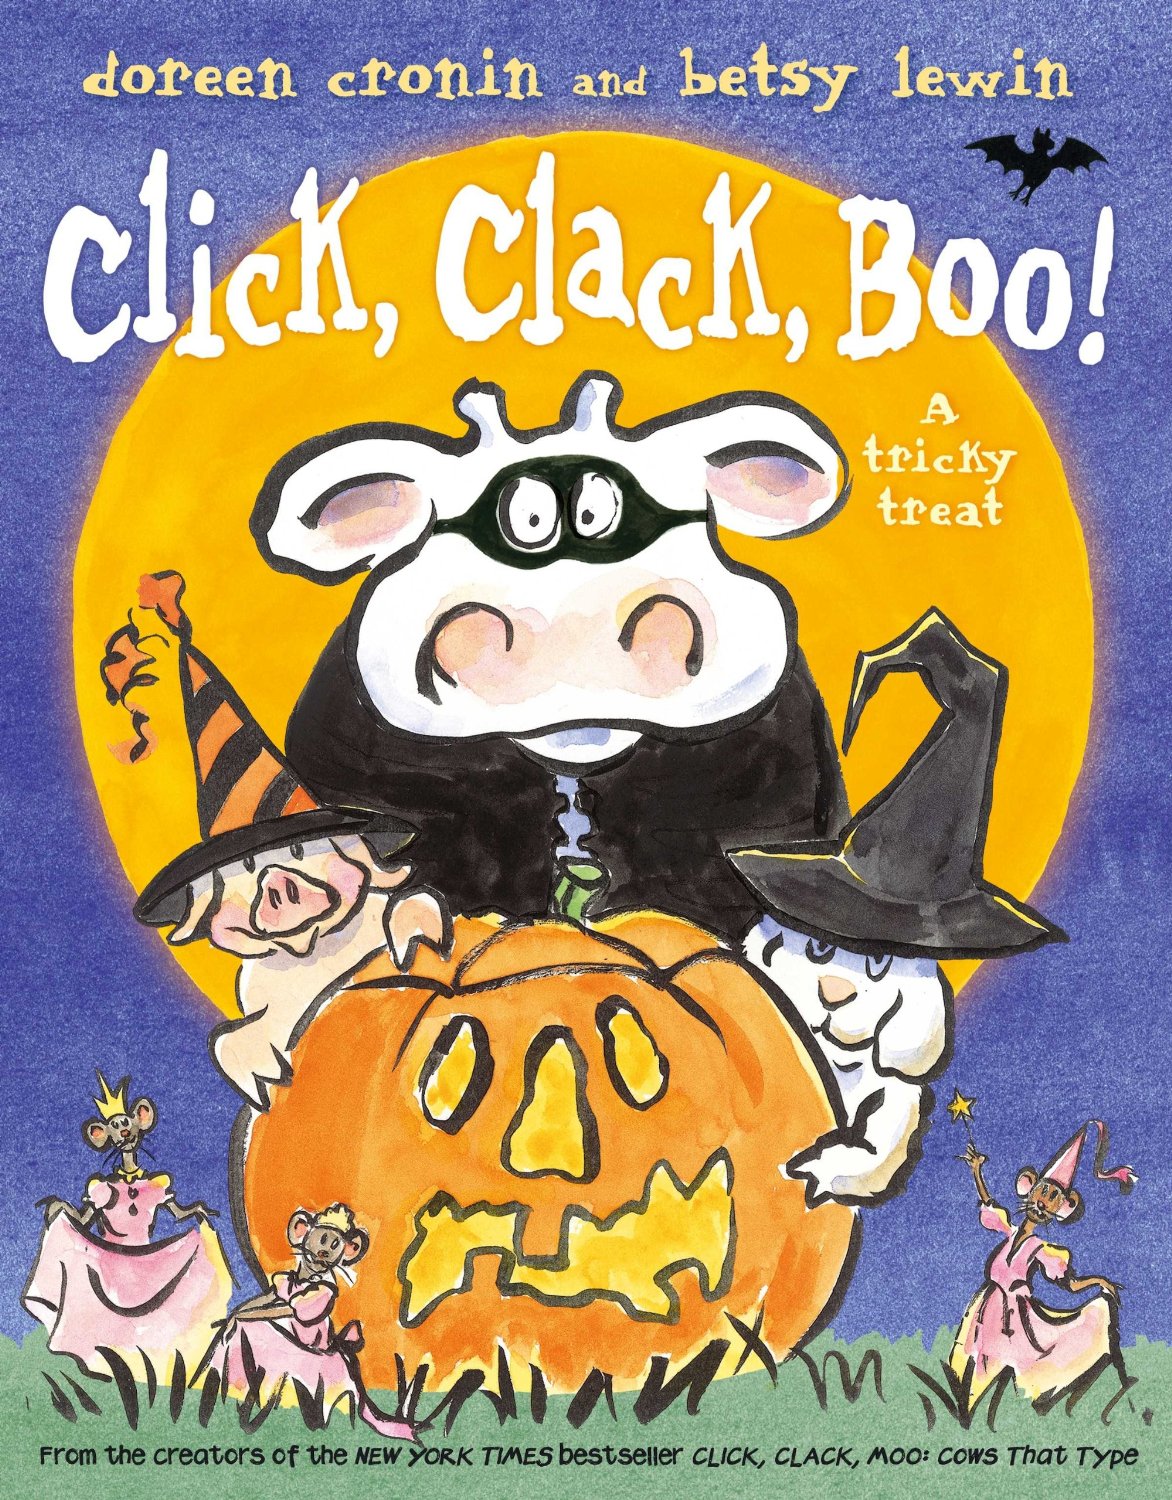 Click, Clack, Boo! by Doreen Cronin